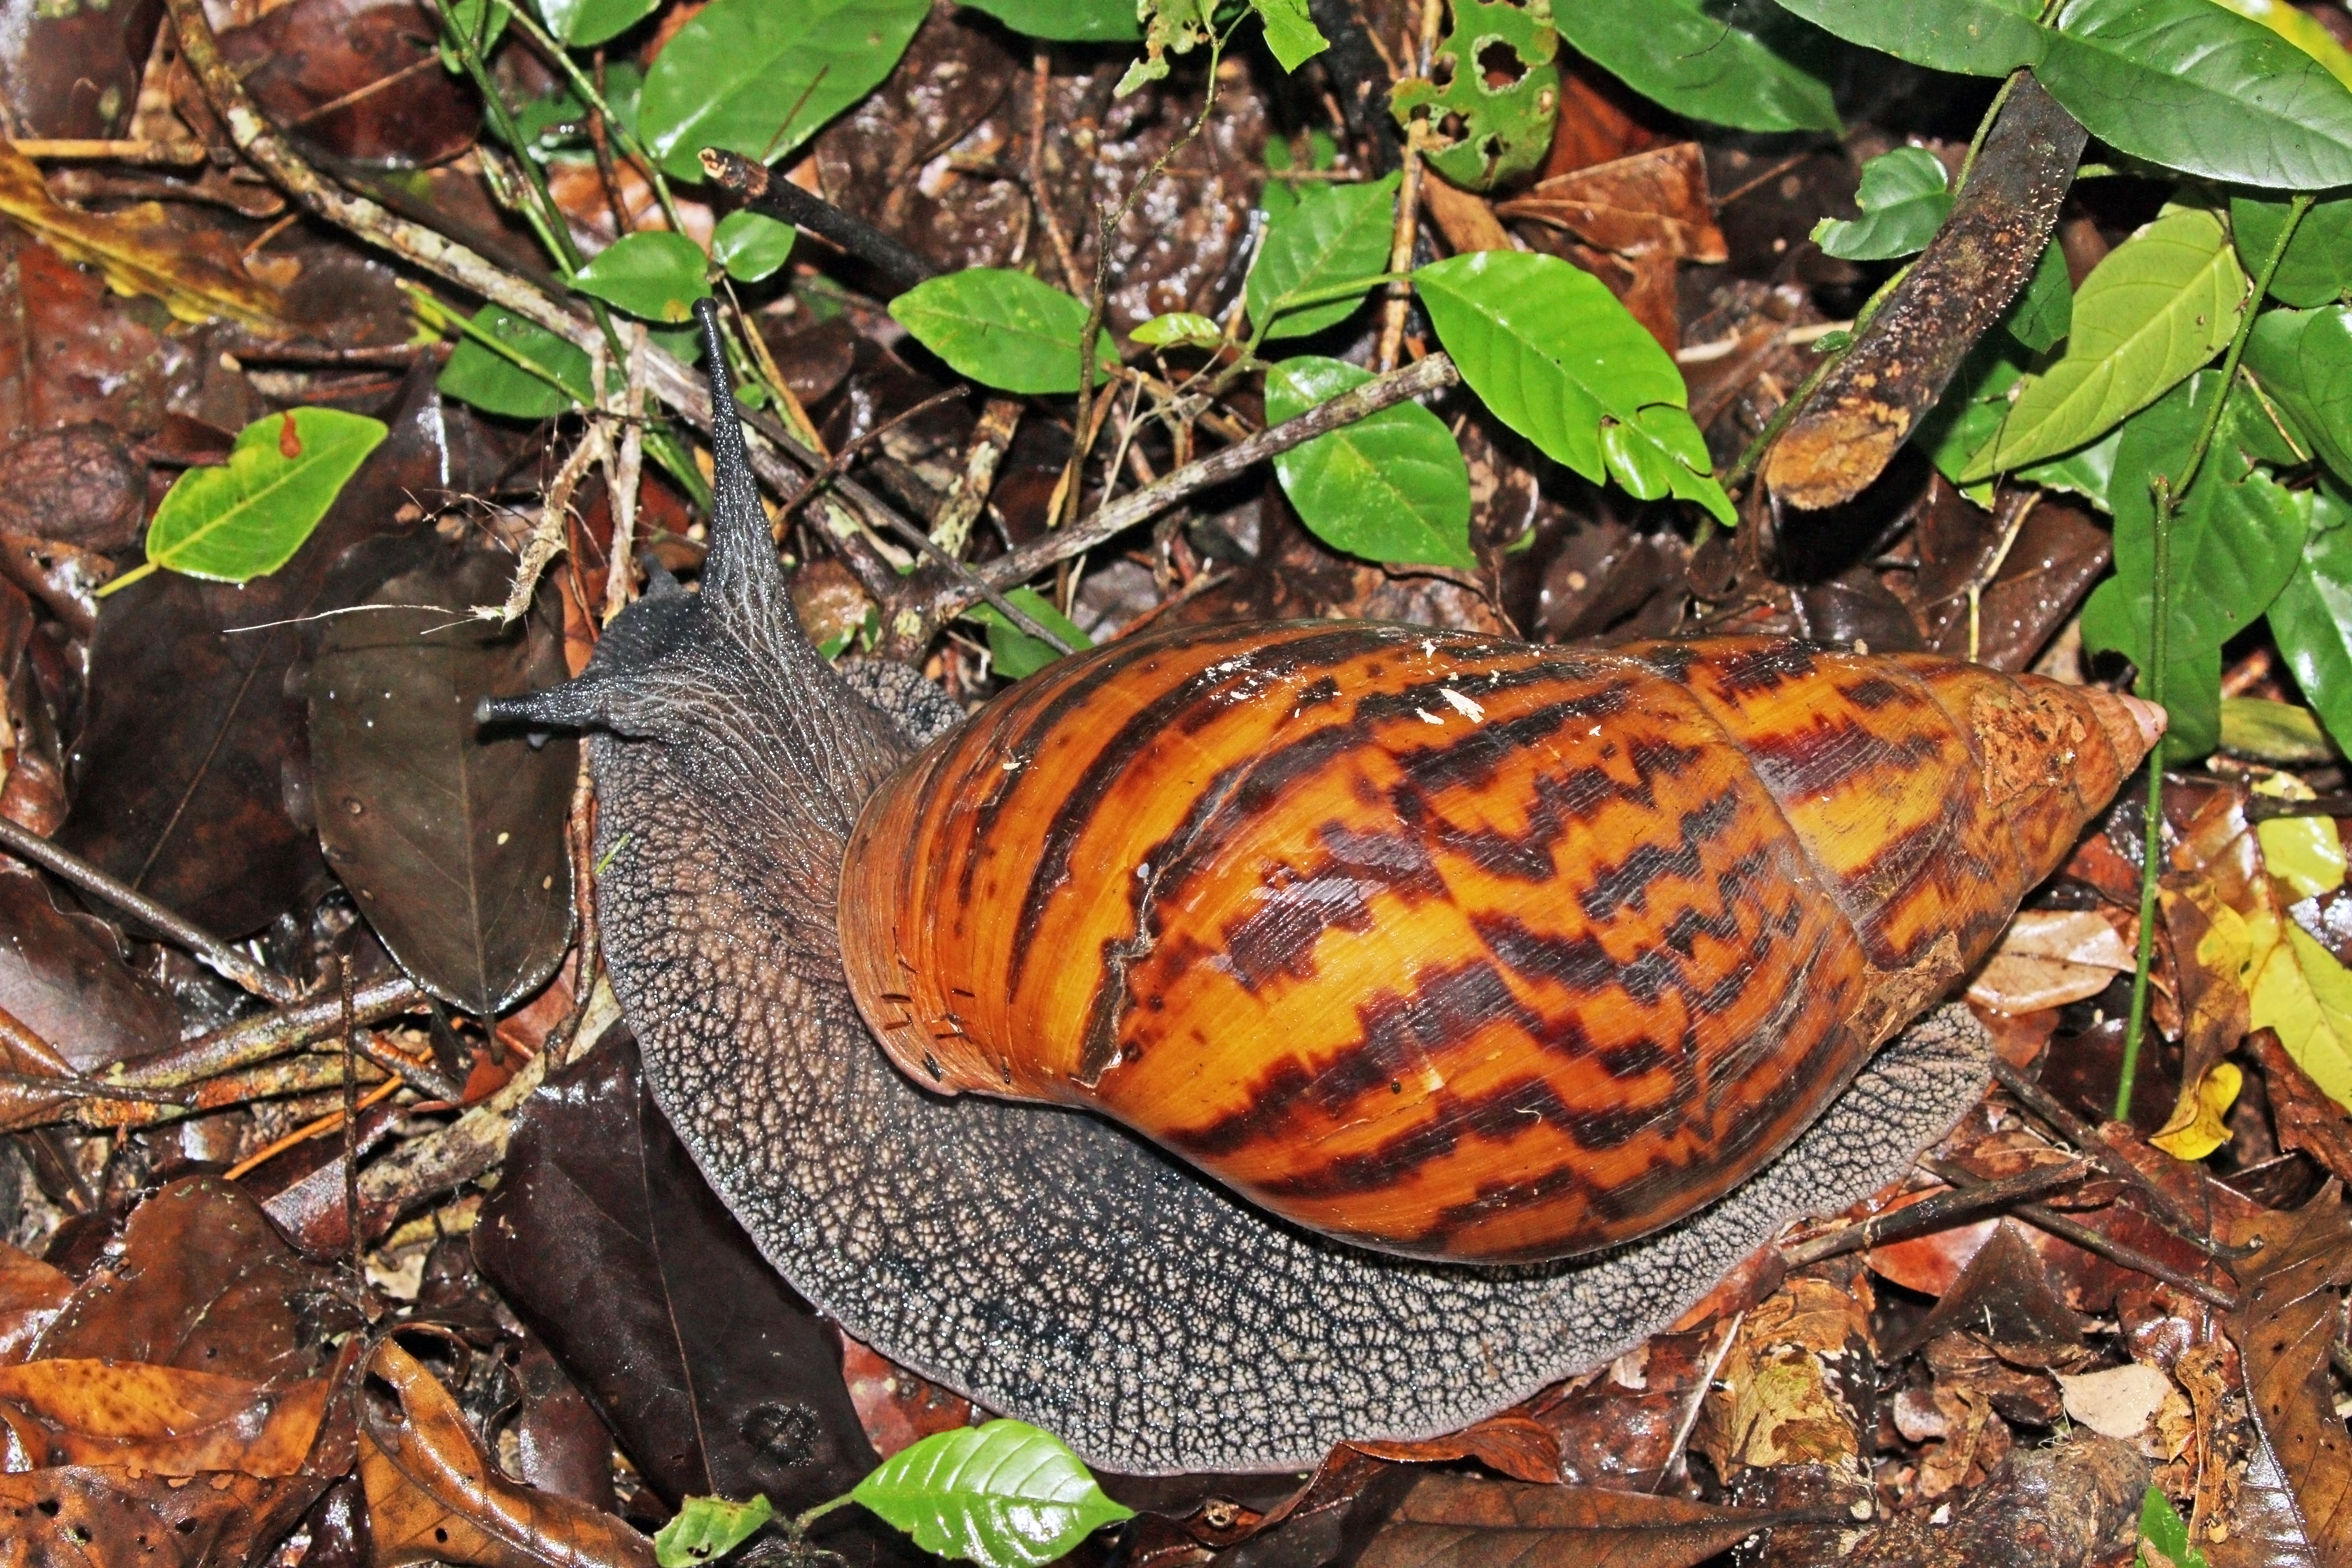 File:Giant tiger land snail (Achatina achatina).jpg - Wikimedia Commons